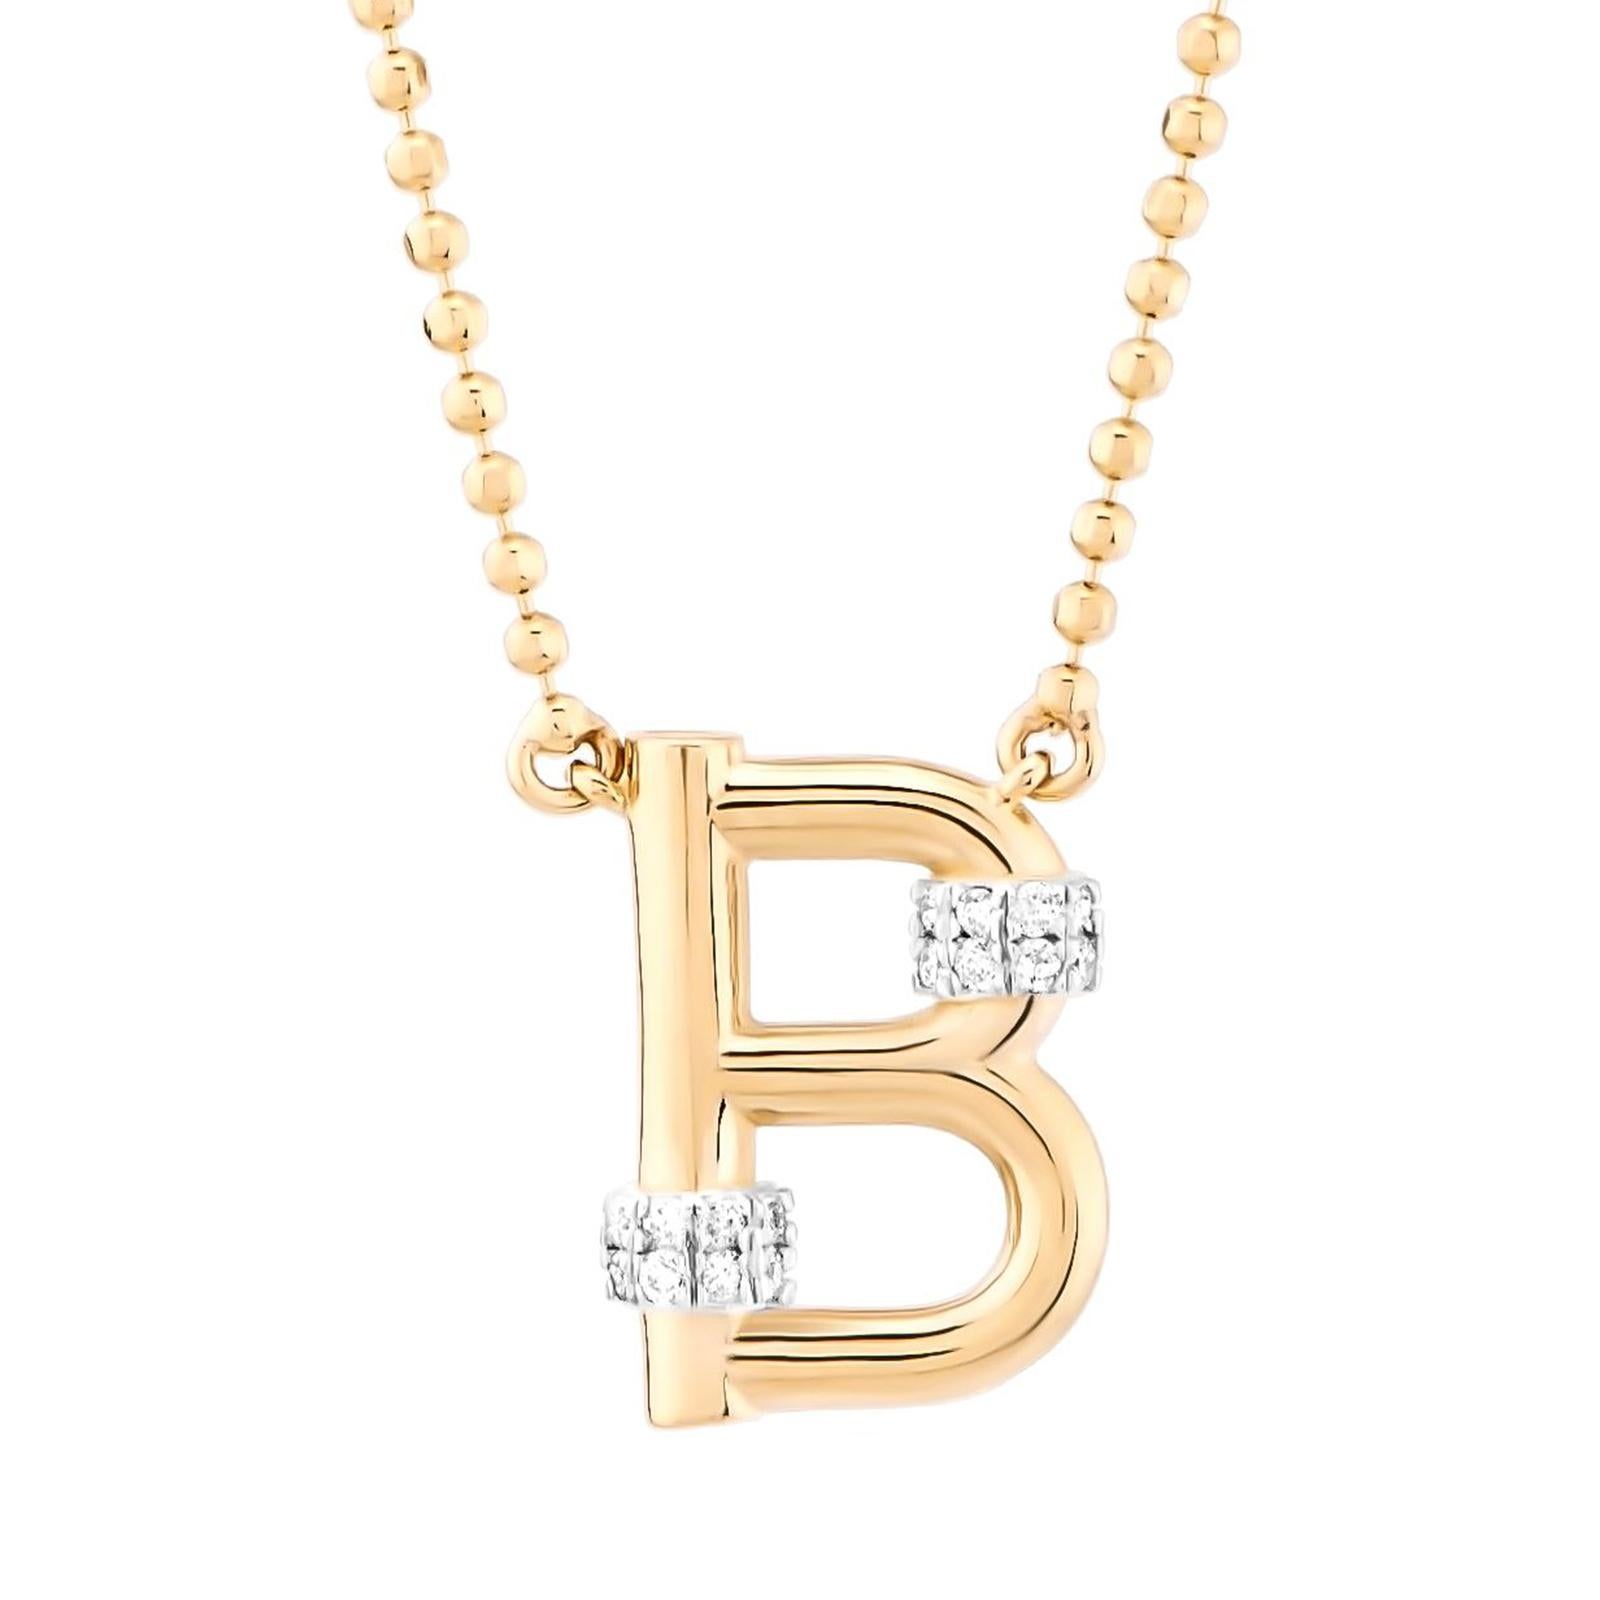 b letter necklace